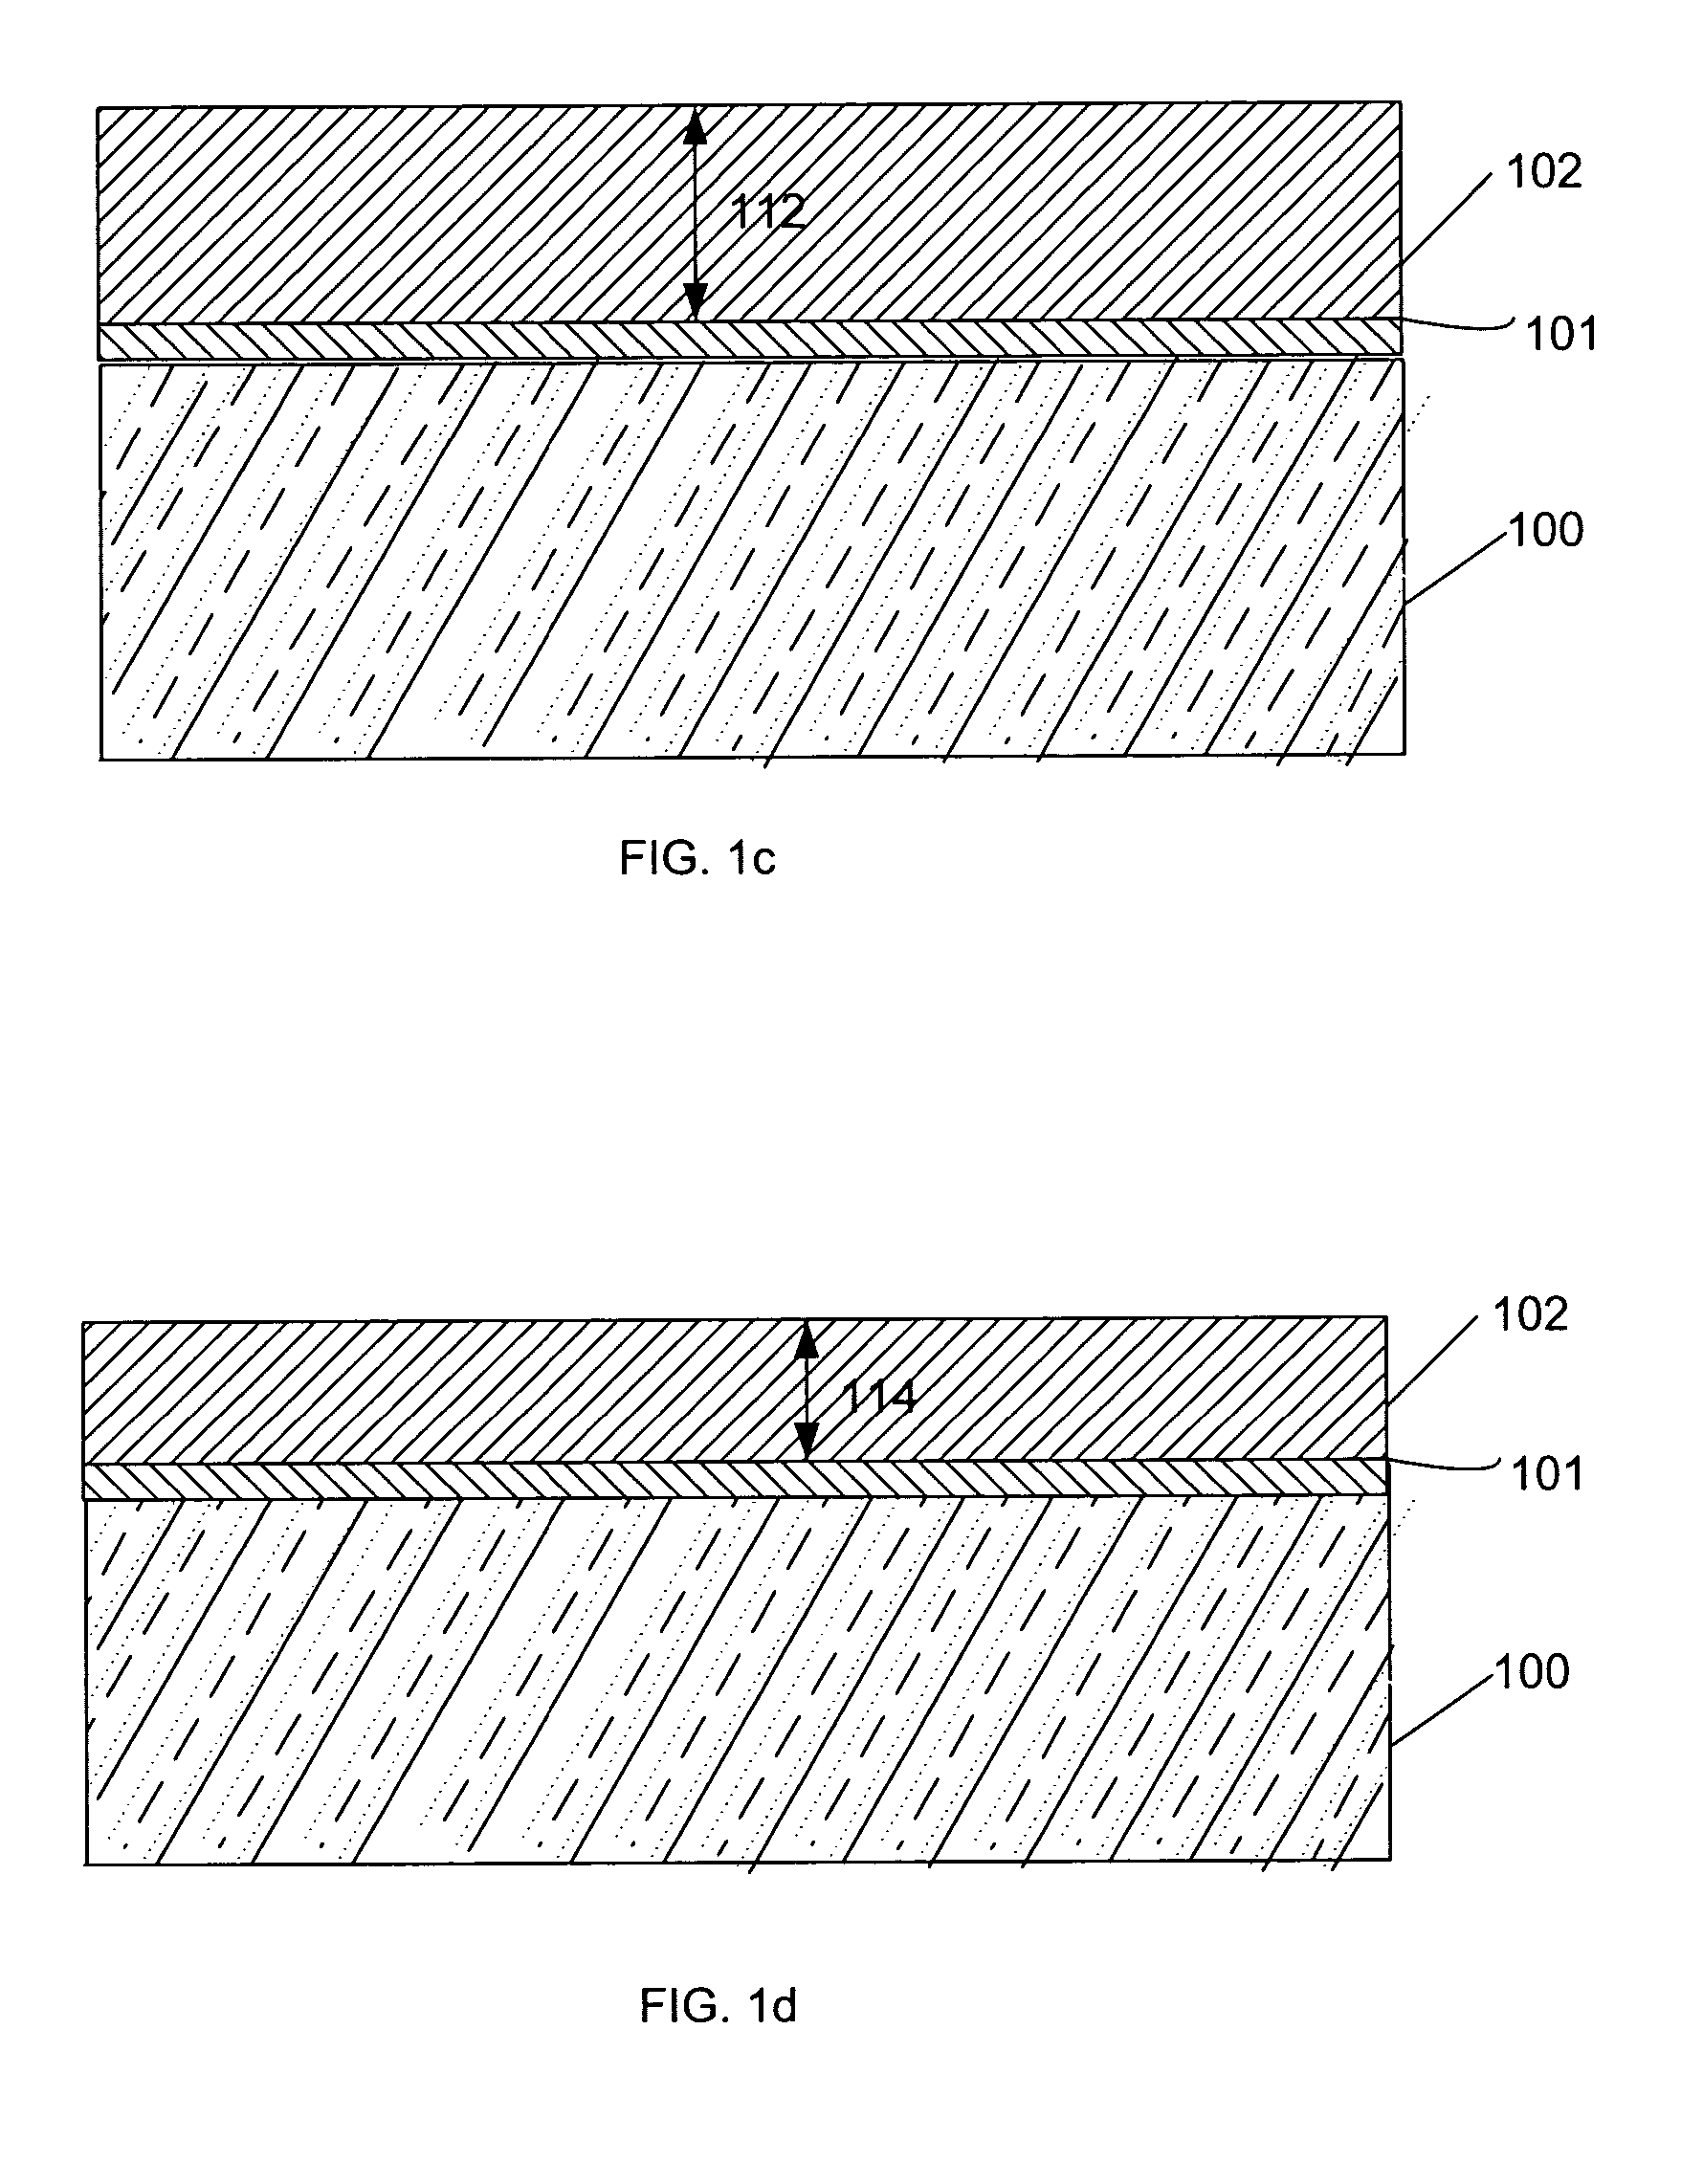 Germanium-on-insulator fabrication utilizing wafer bonding